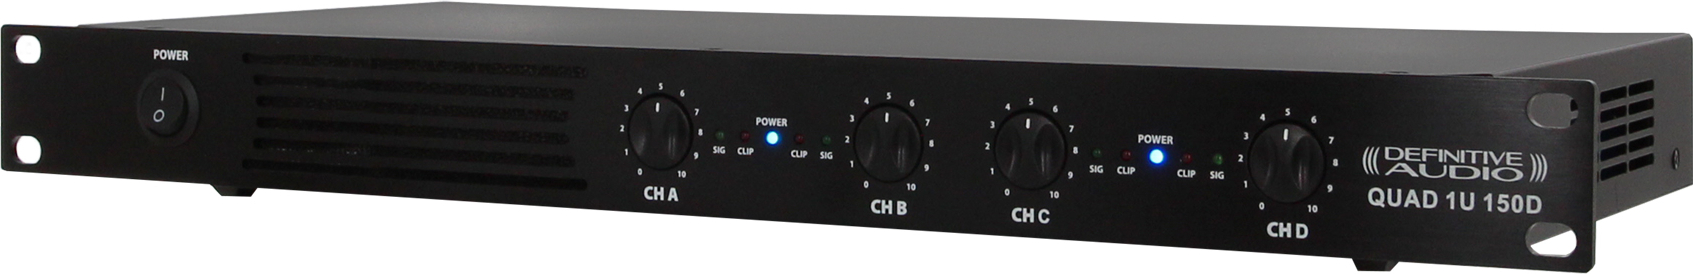 Definitive Audio Quad 1u 150d - Multi-kanalen krachtversterker - Main picture